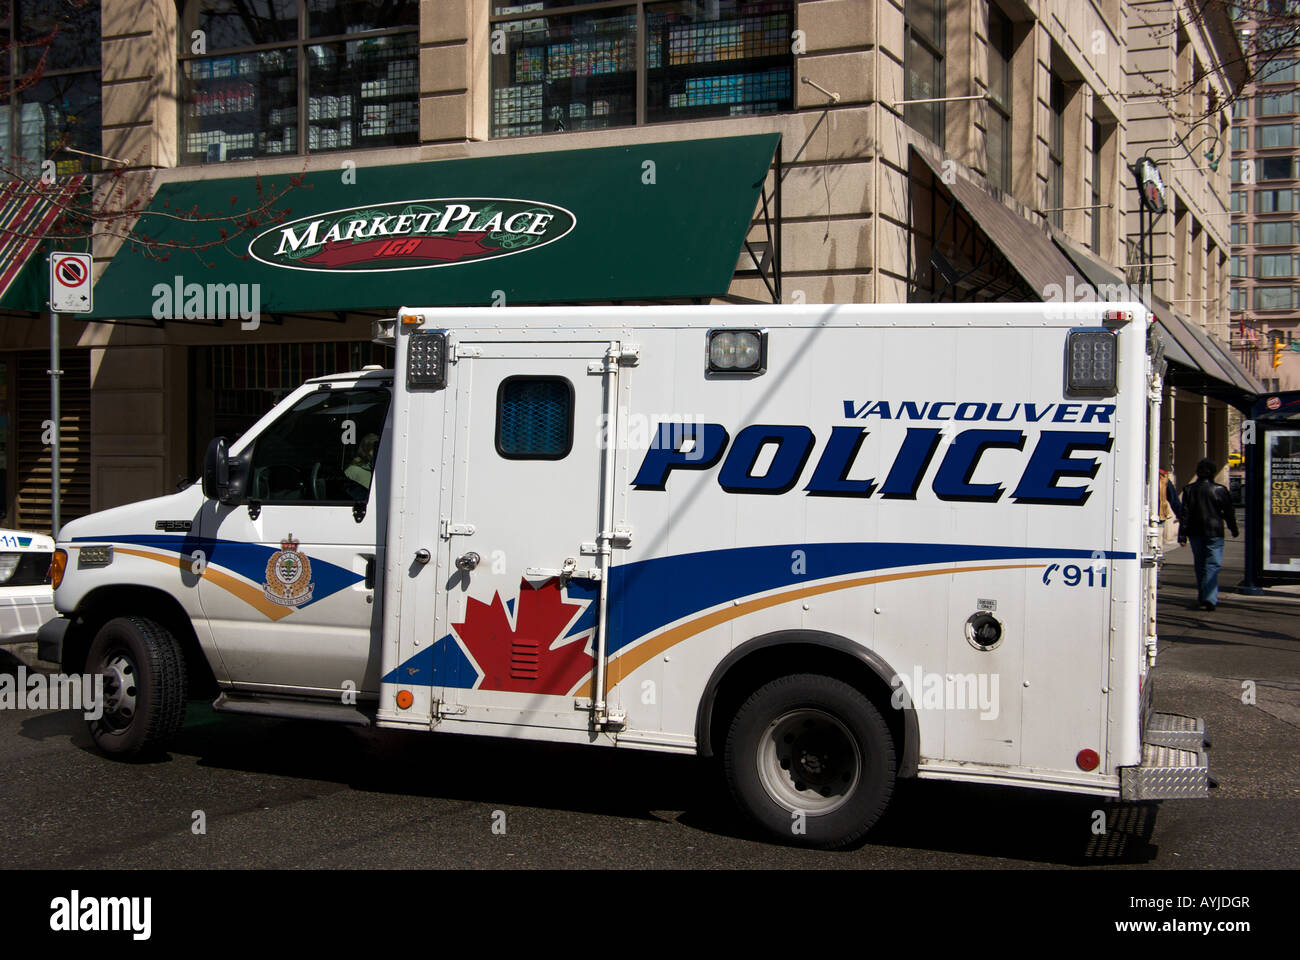 Vancouver Police paddy wagon. Stock Photo